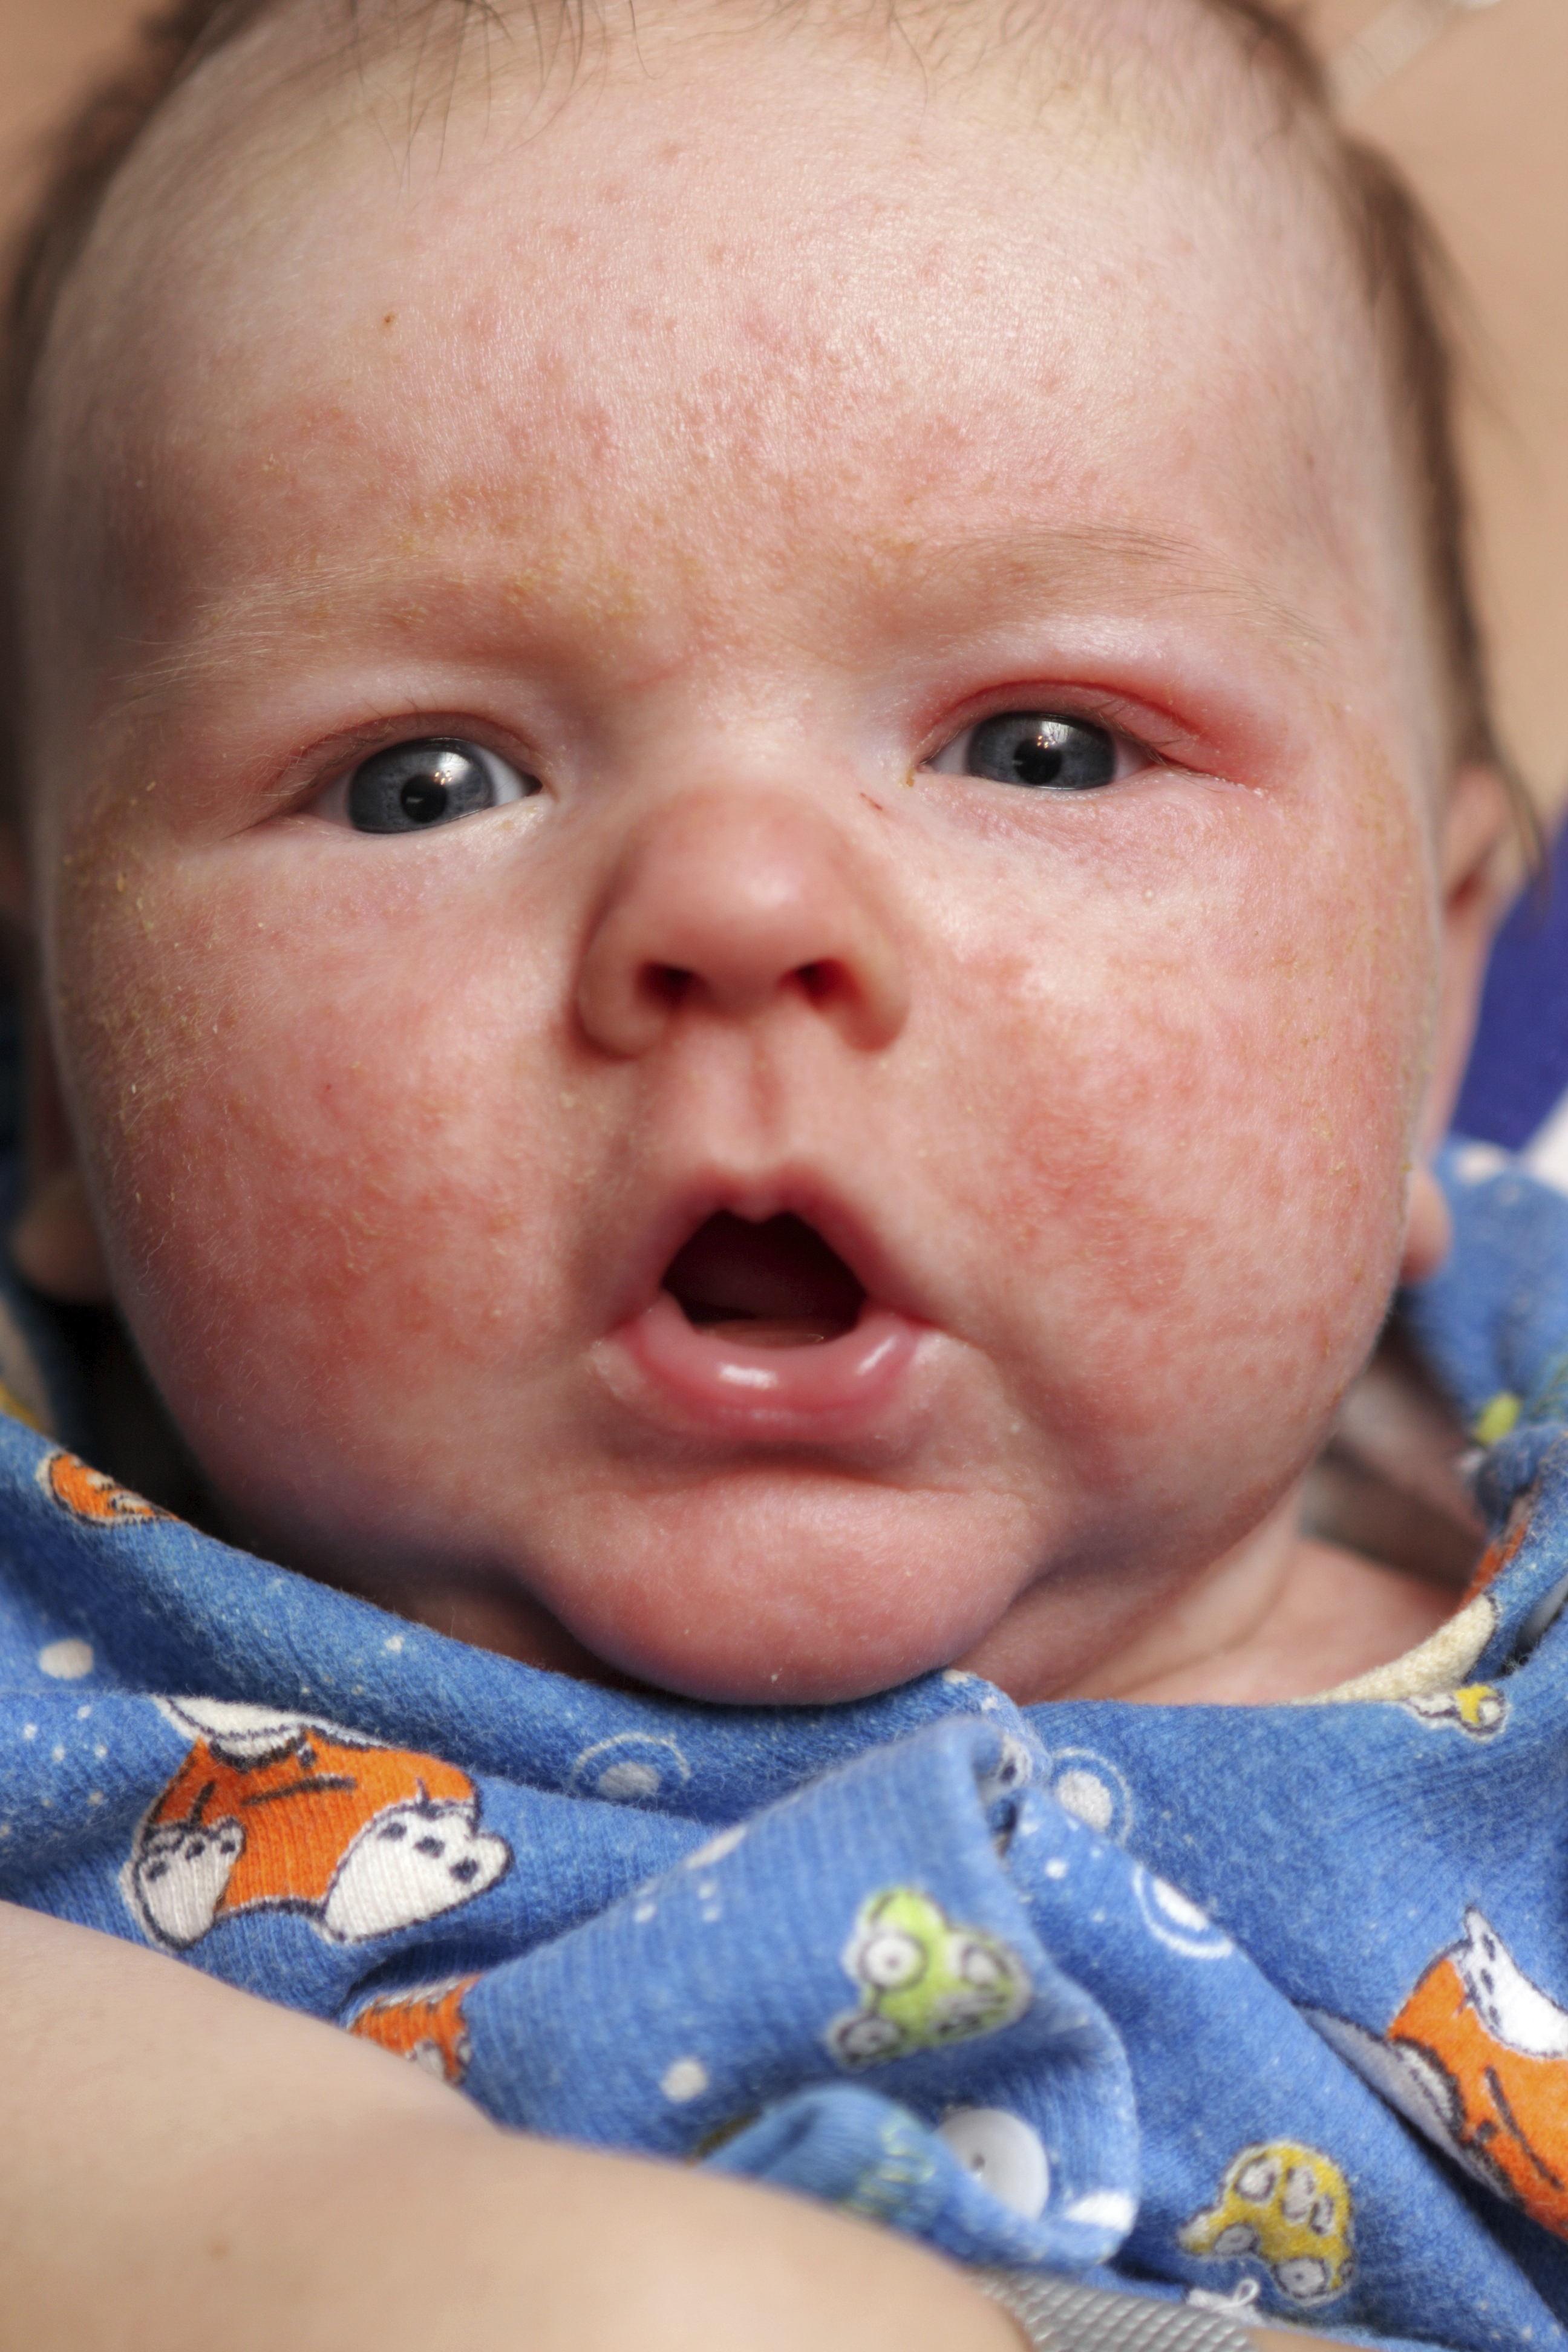 eczema treatment baby face)